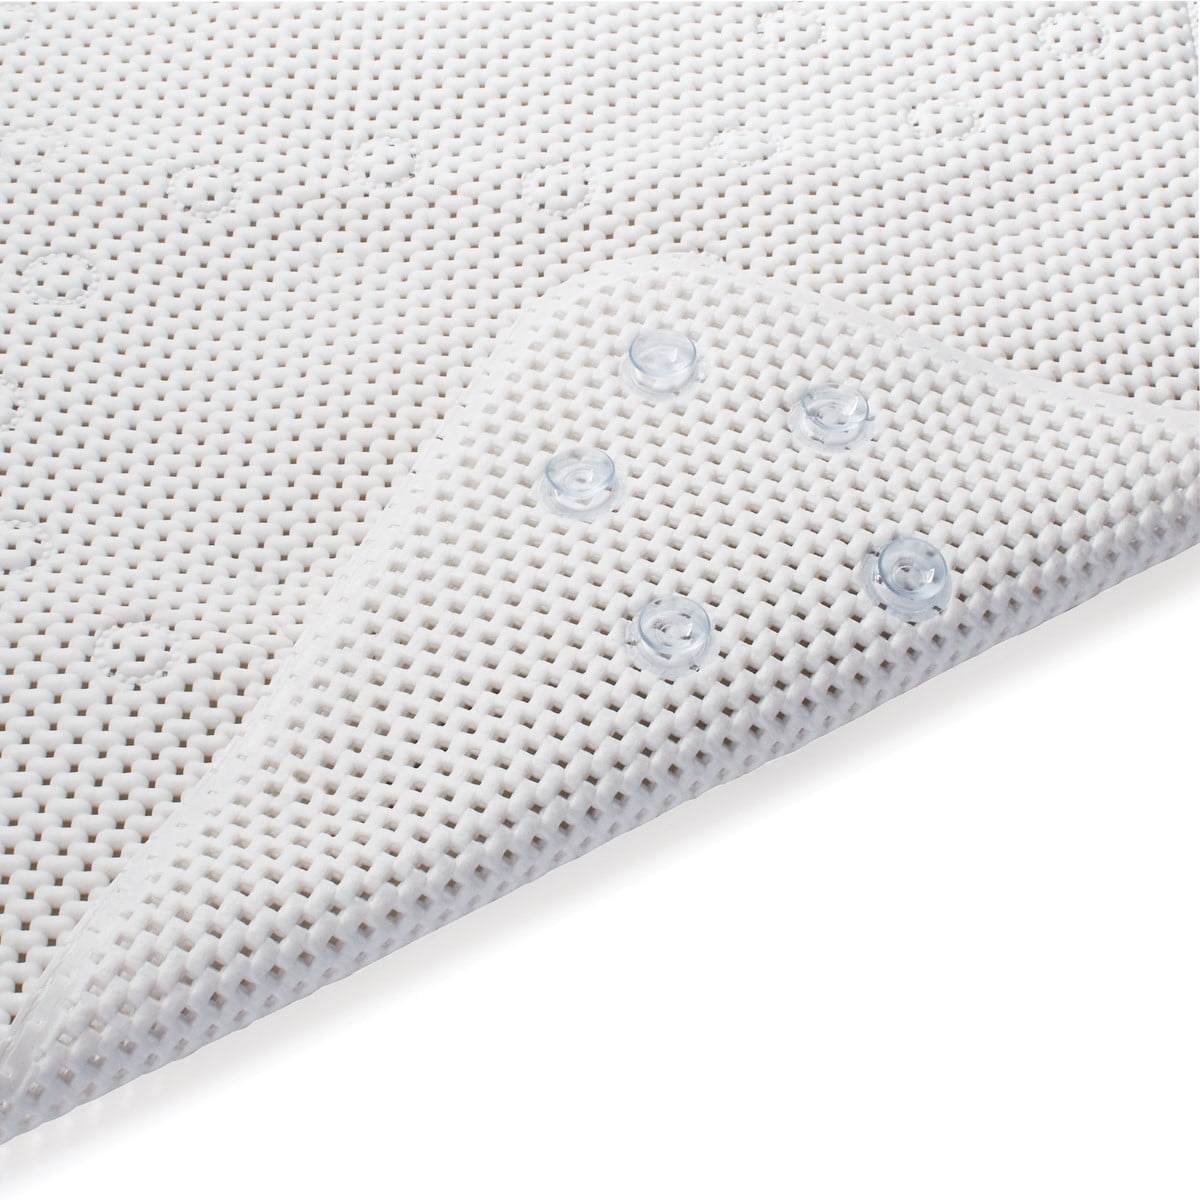 PVC/Cushion Shower Stall Mat White - Room Essentials™